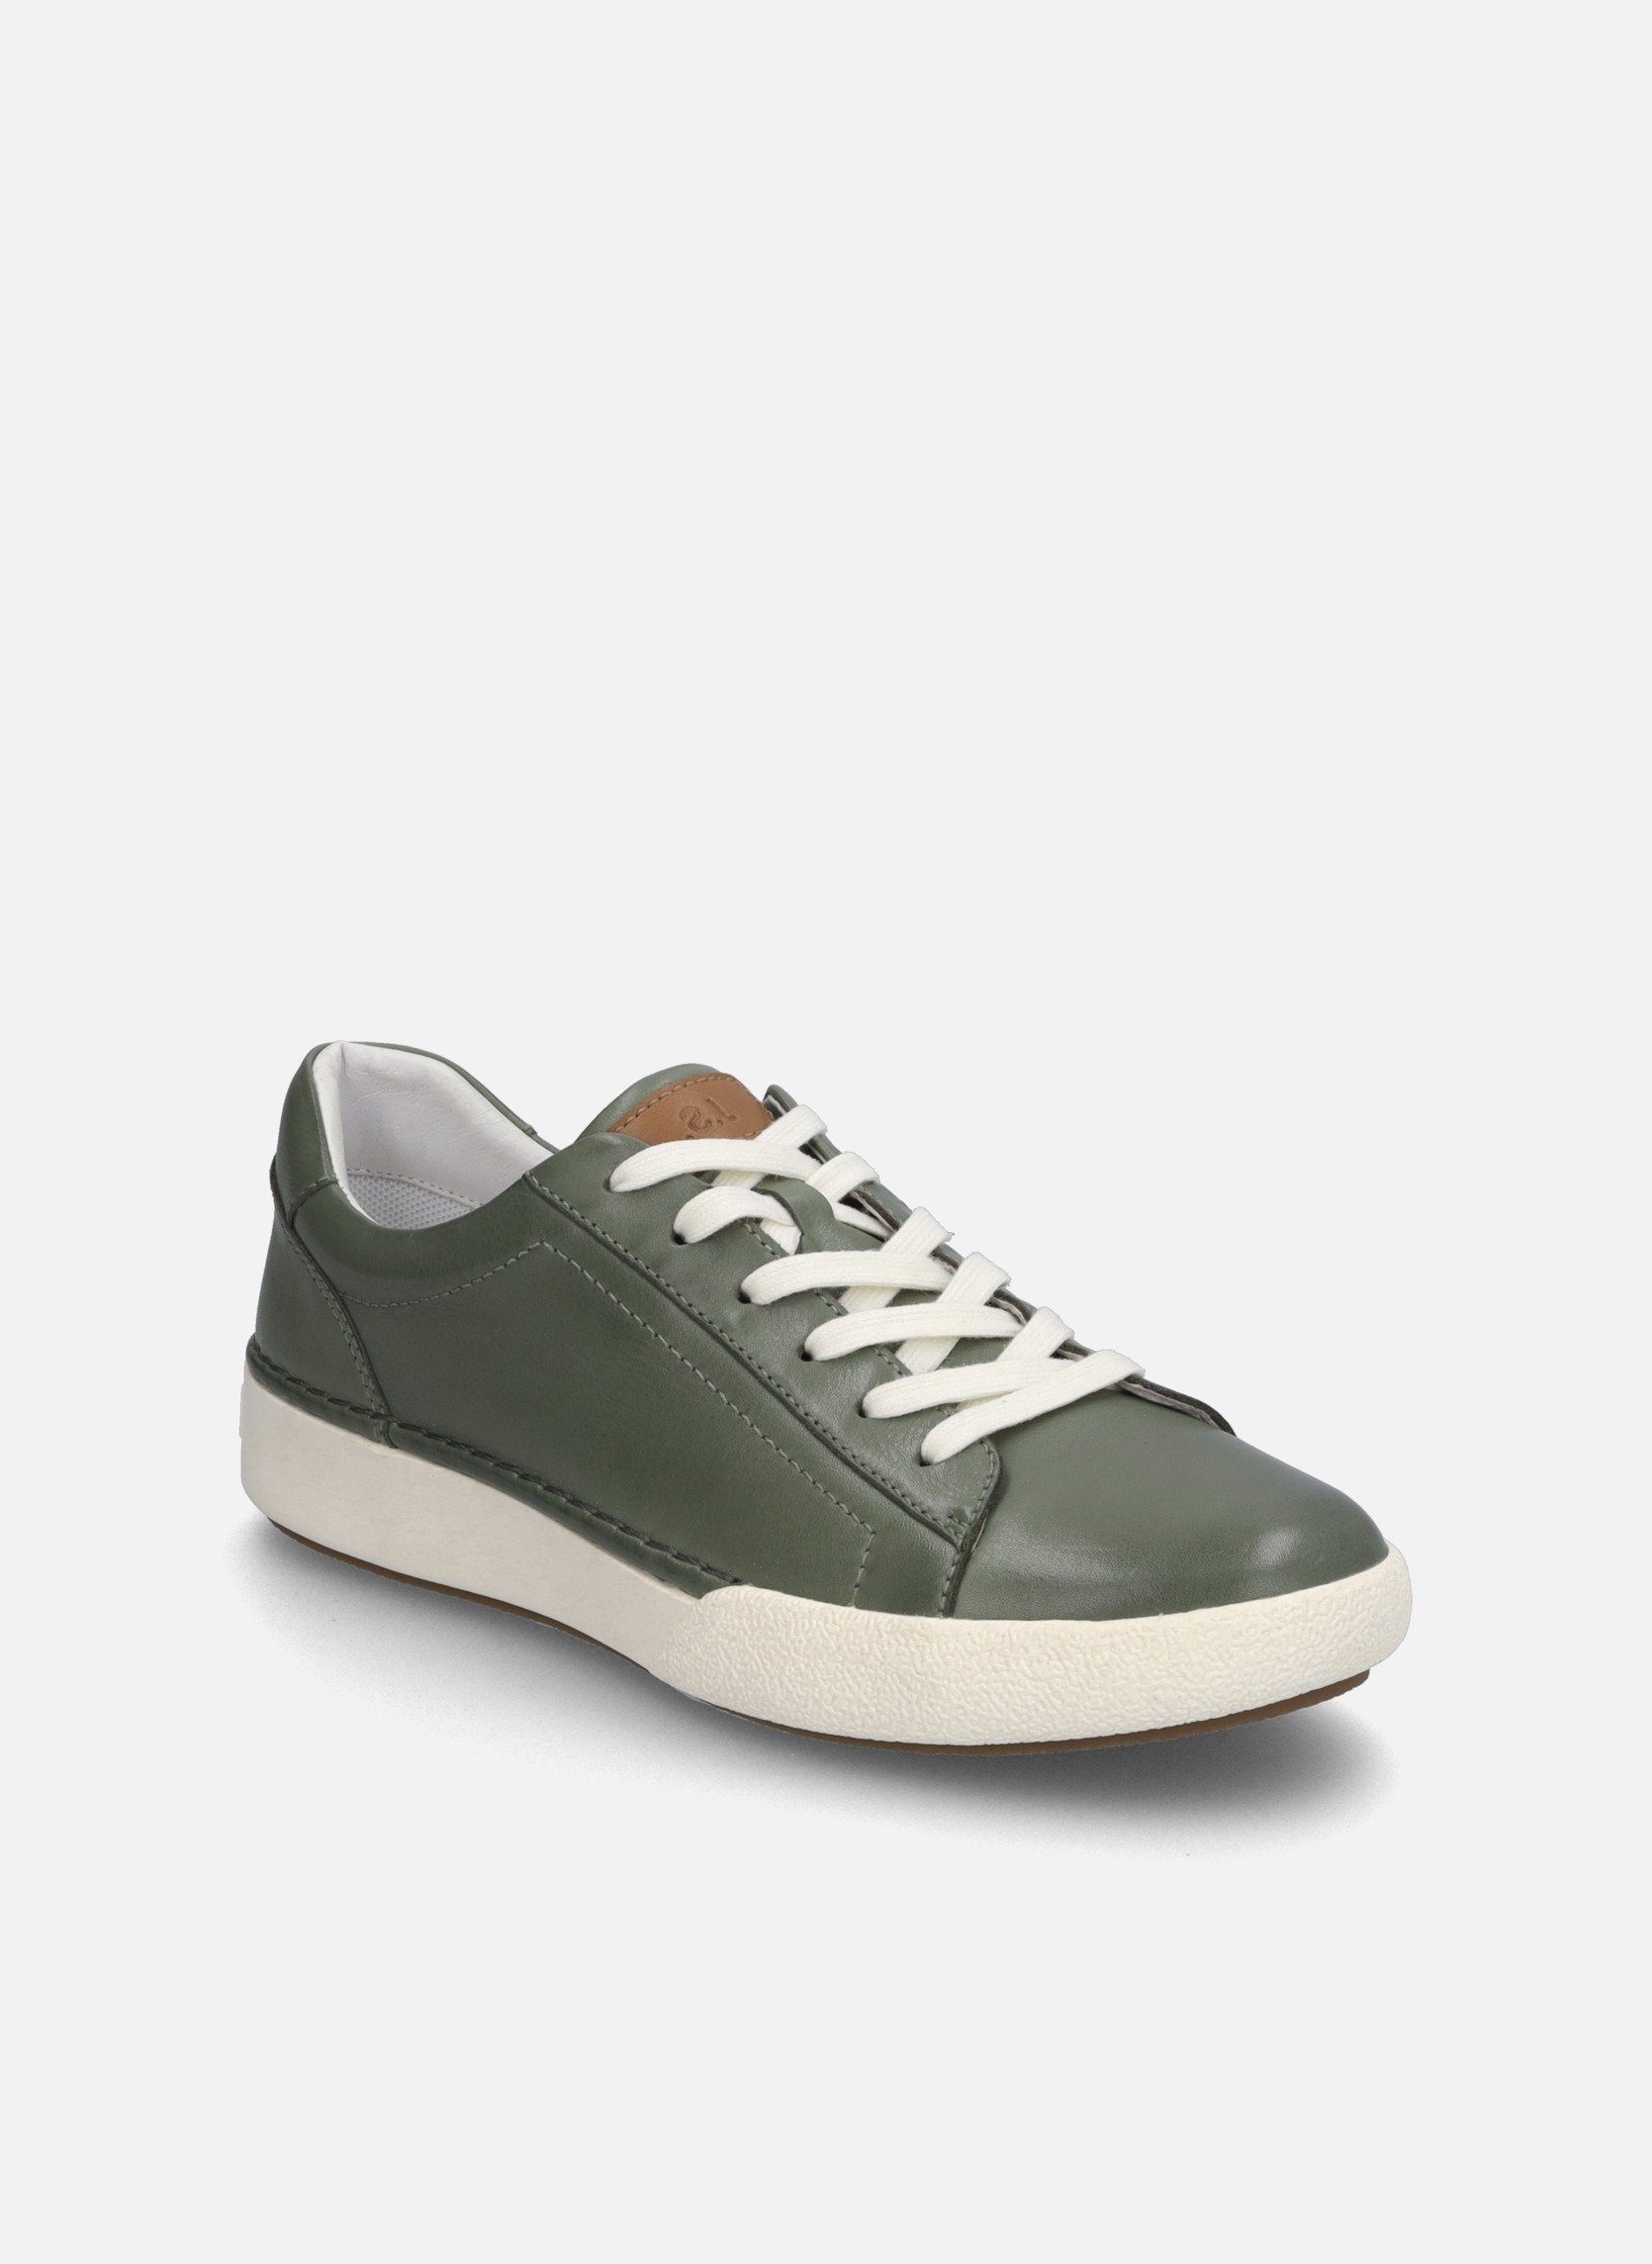 grün Seibel Sneaker 01, Josef Claire